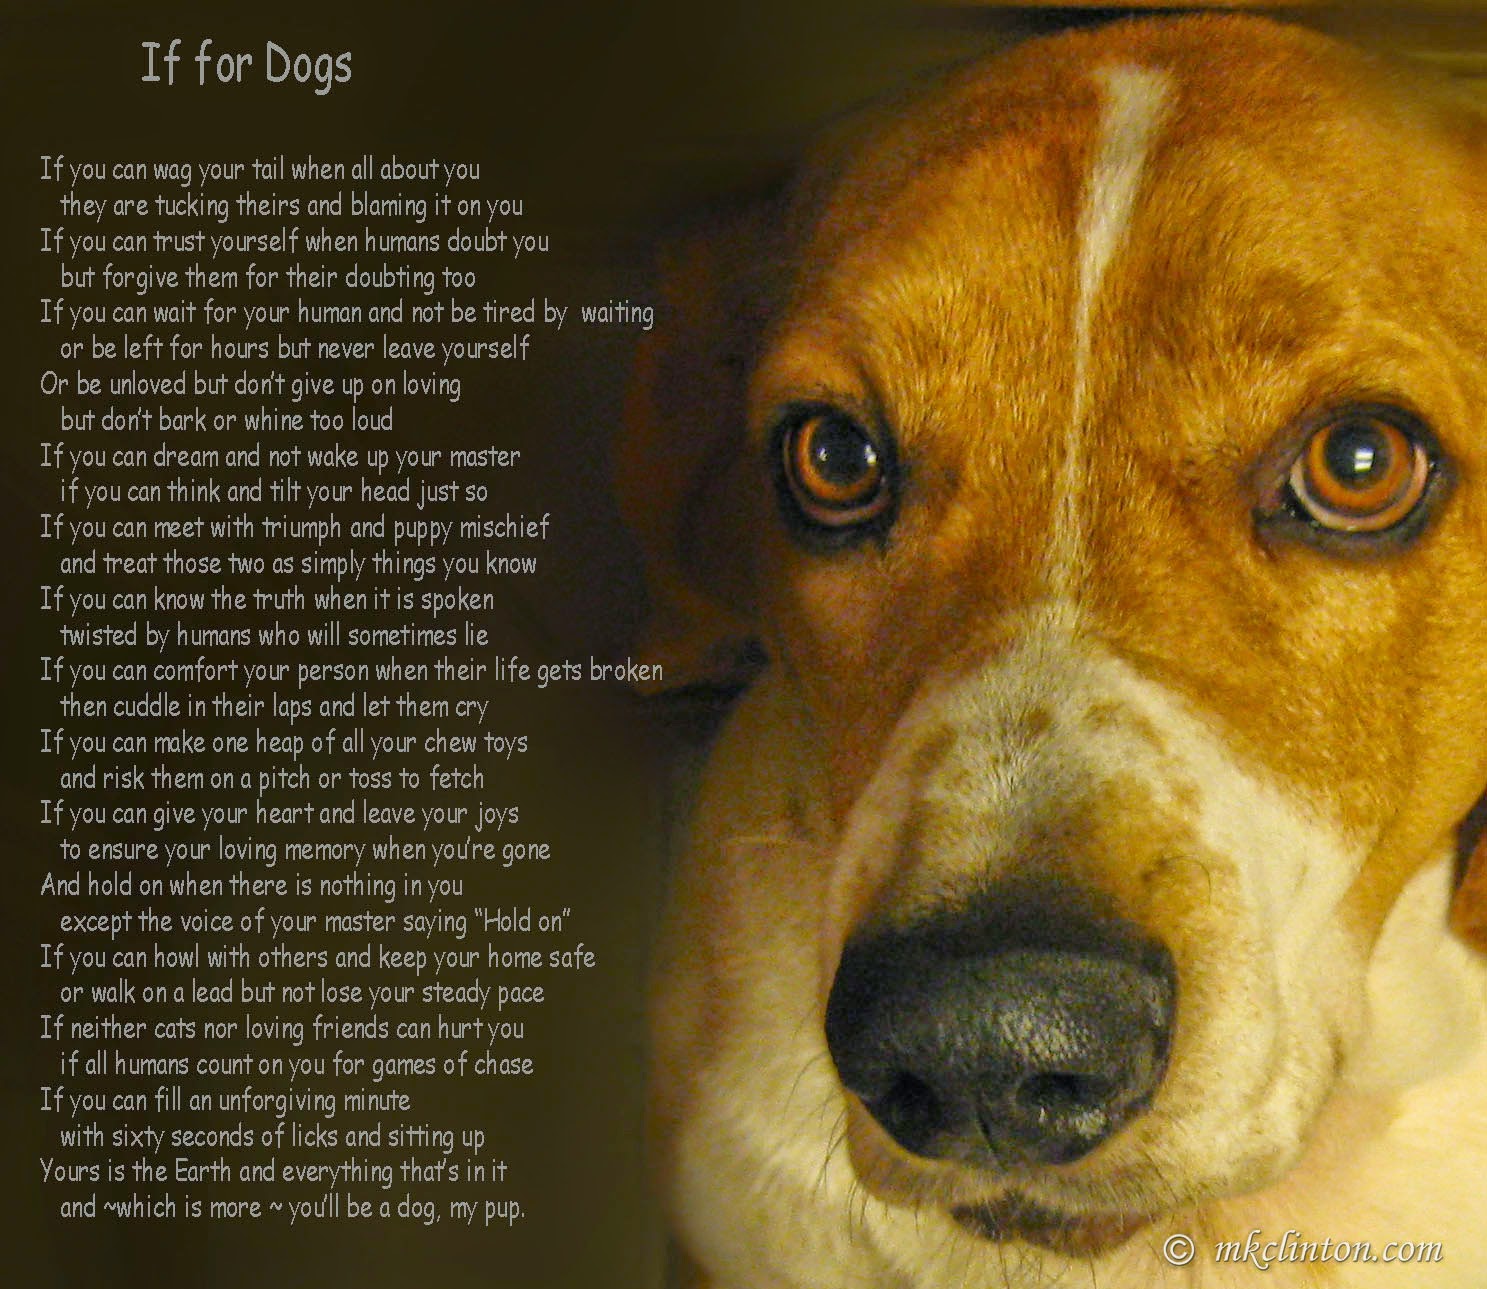 dogs kipling rudyard quotes dog barking poem poems thank poetry bayou